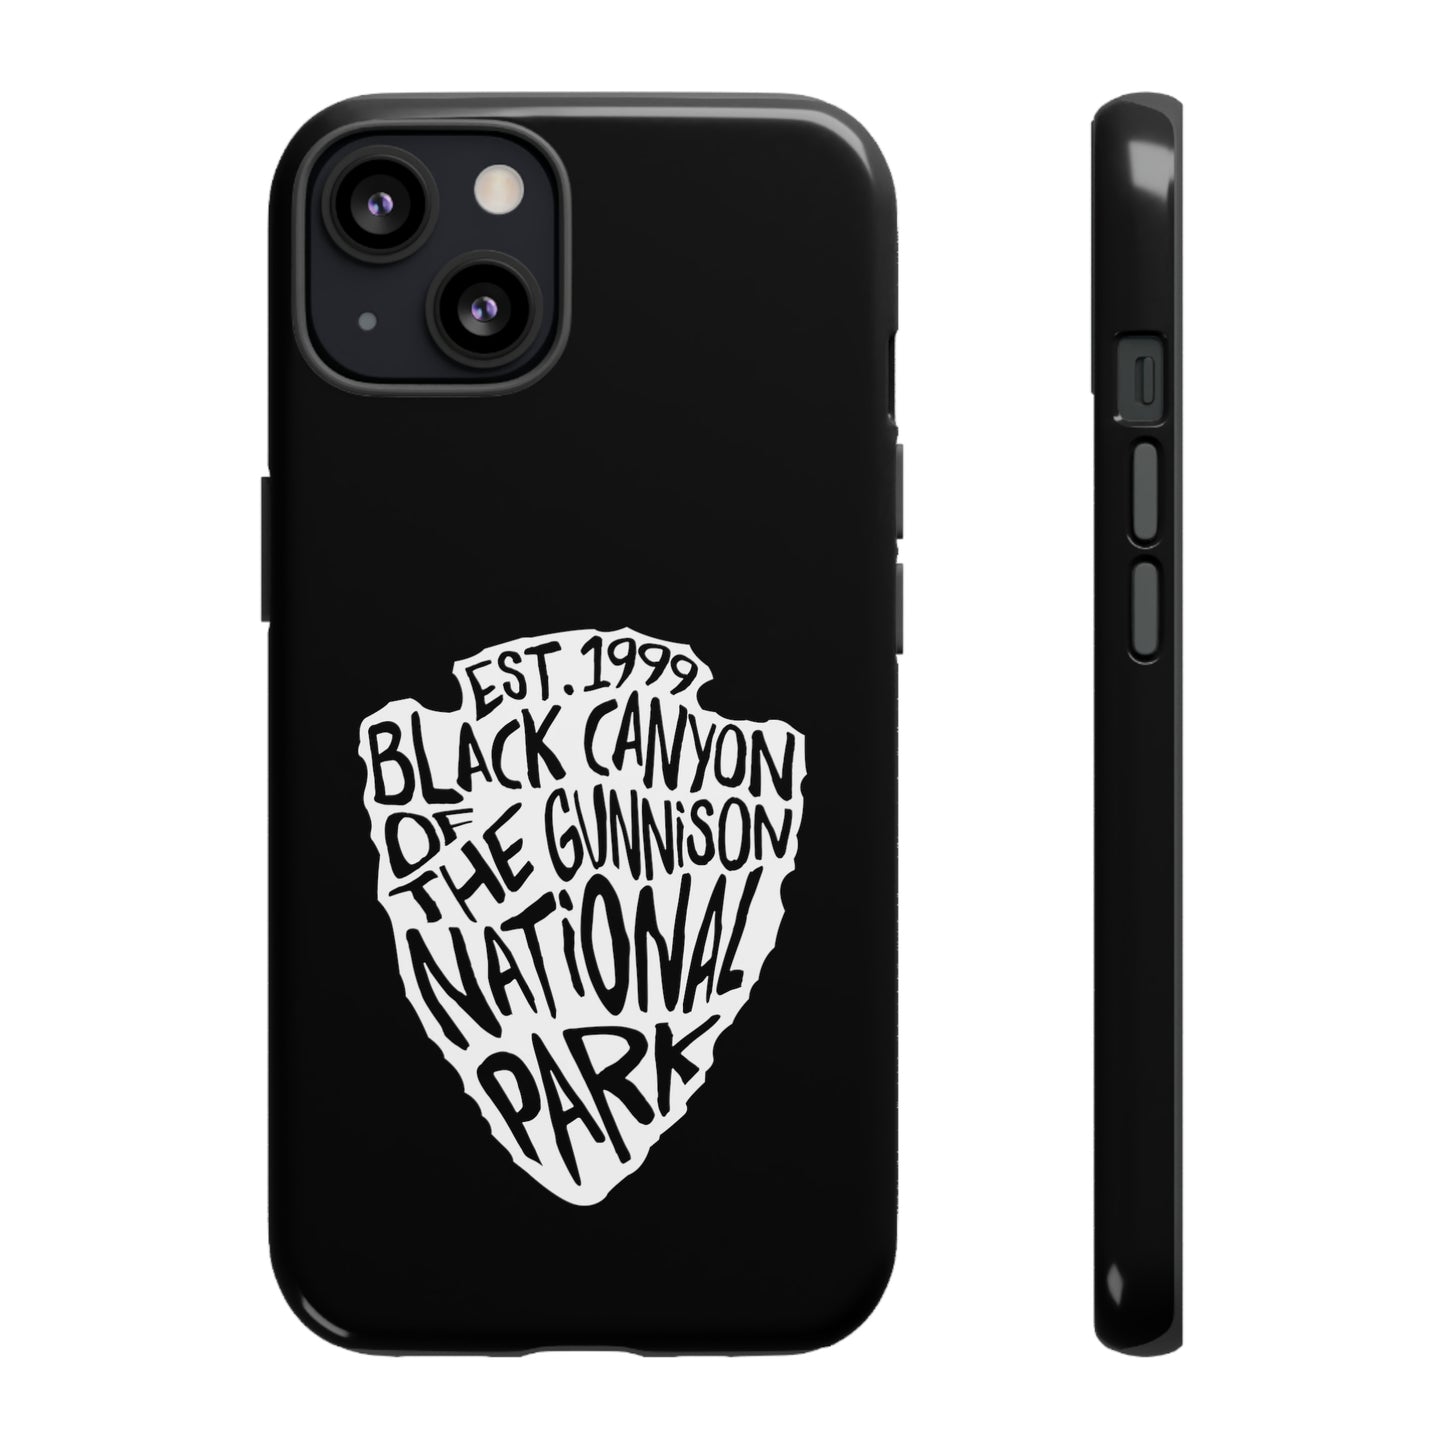 Black Canyon of the Gunnison National Park Phone Case - Arrowhead Design